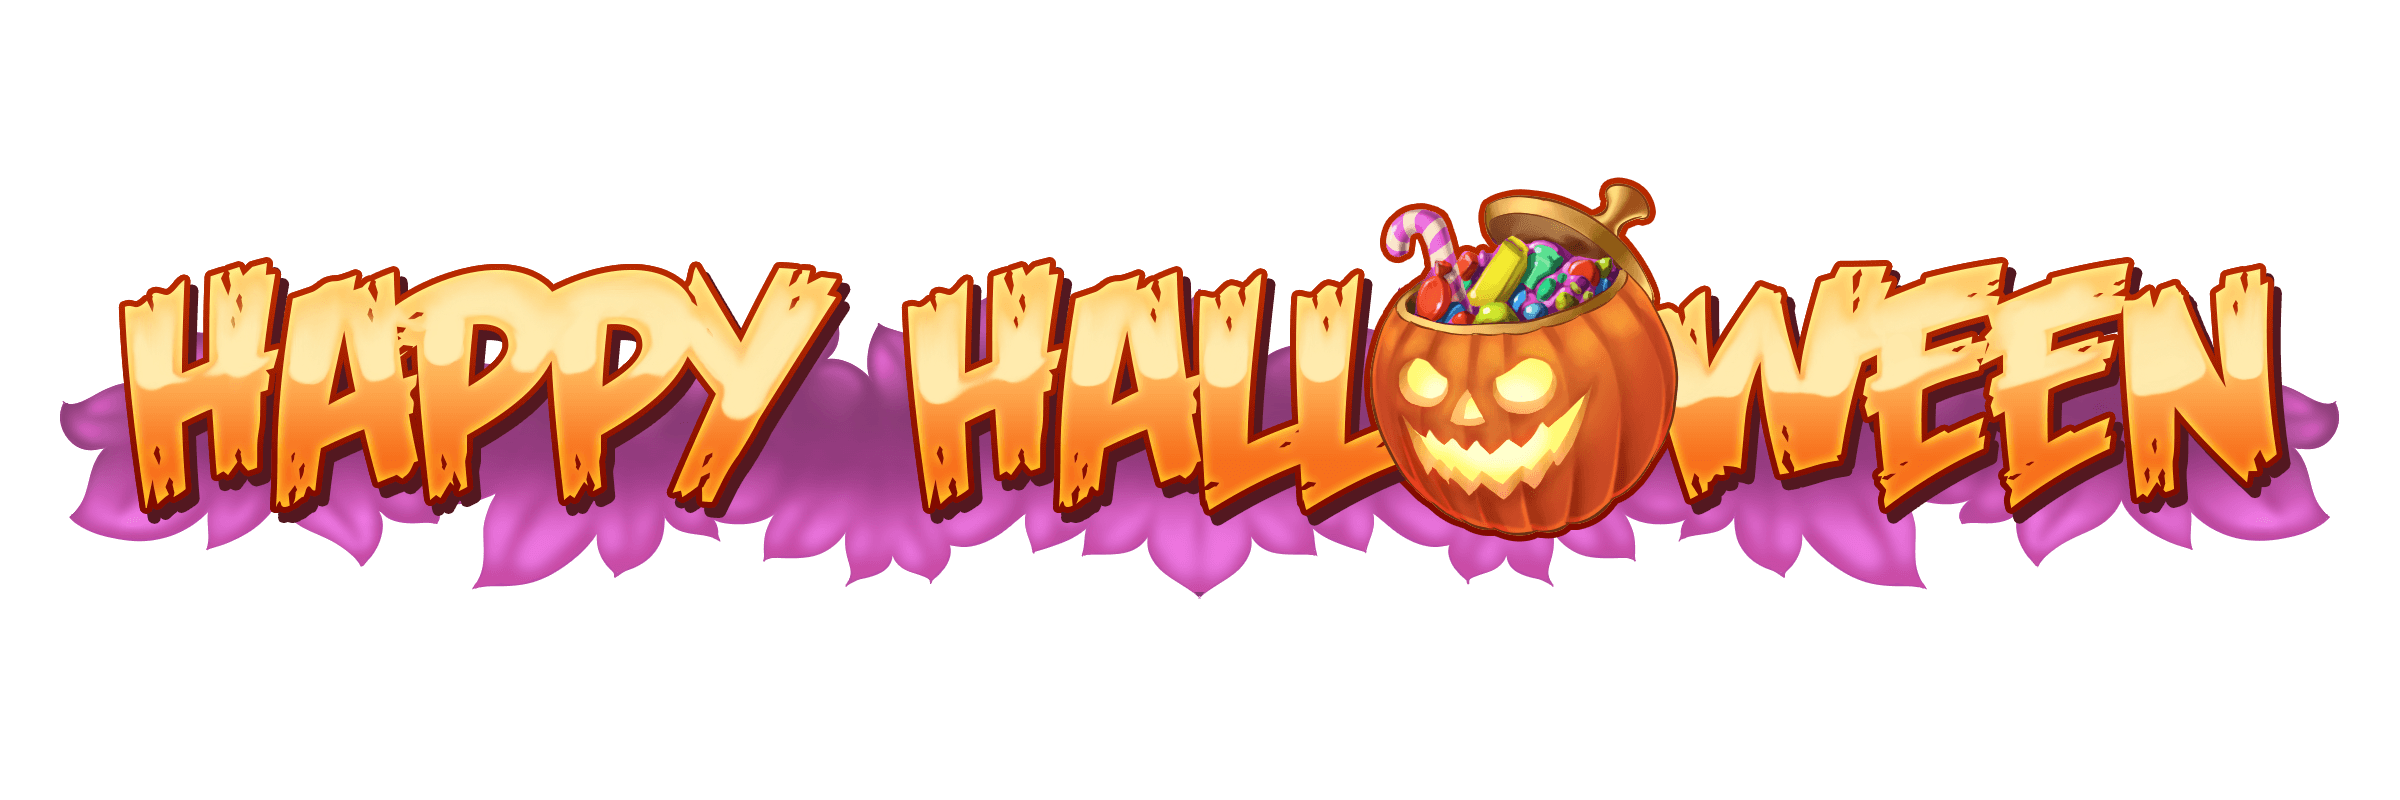 Happy-Halloween-Download-Transparent-PNG-Image.png